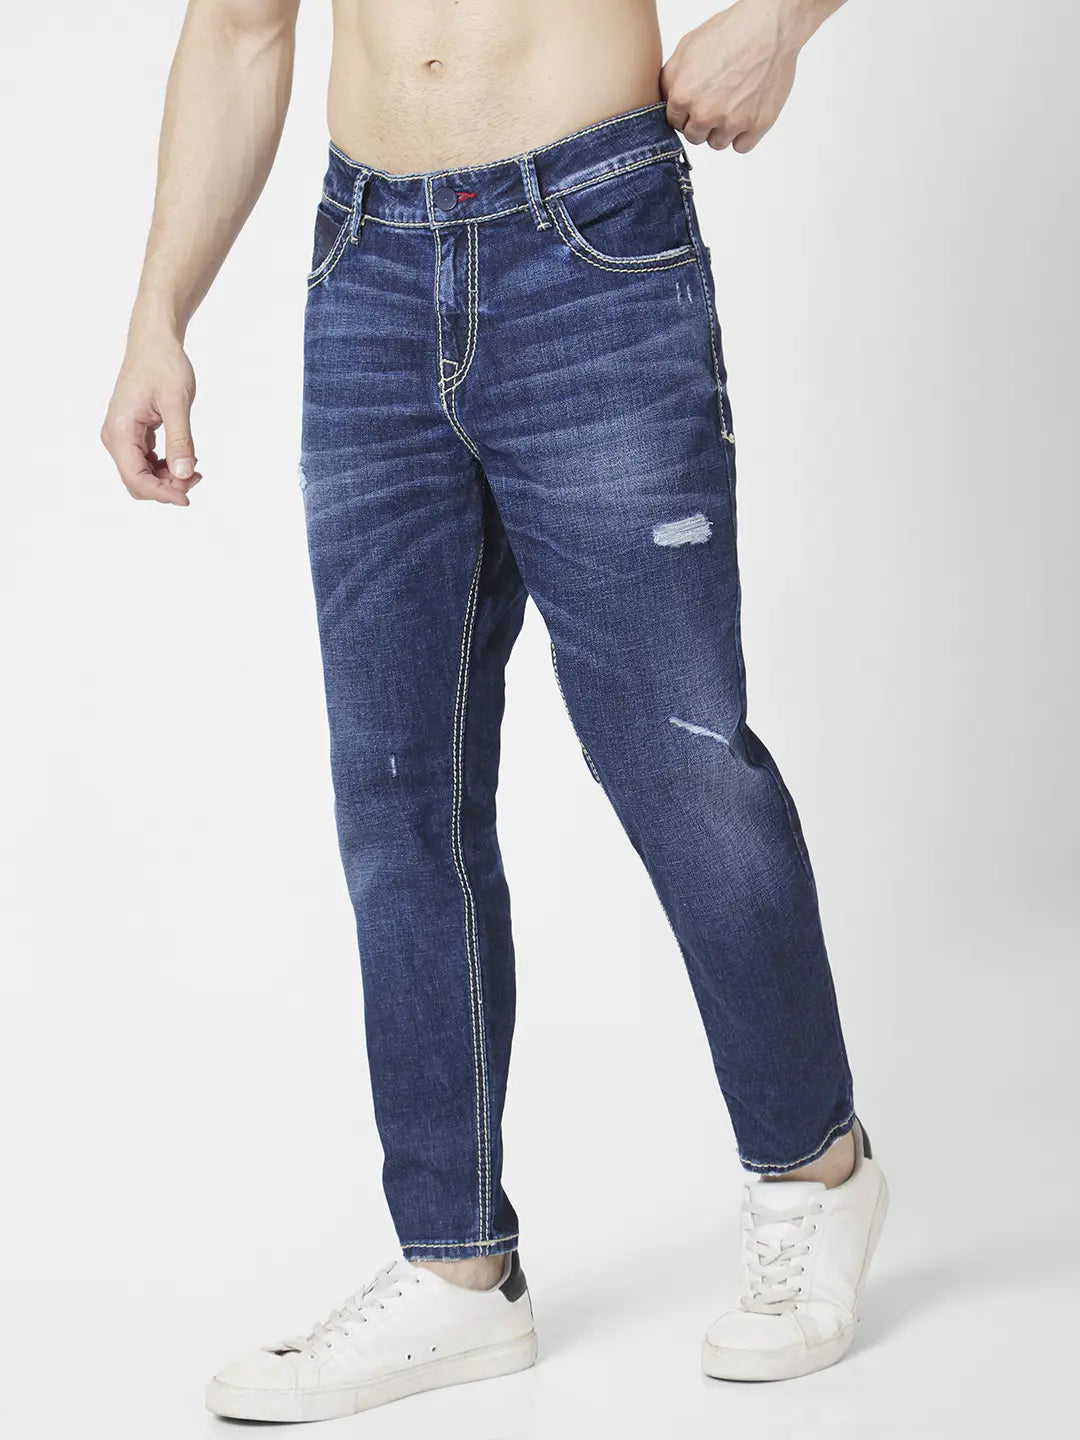 Buy Online|Spykar Mid Rise Comfort Fit Blue Jeans For Men